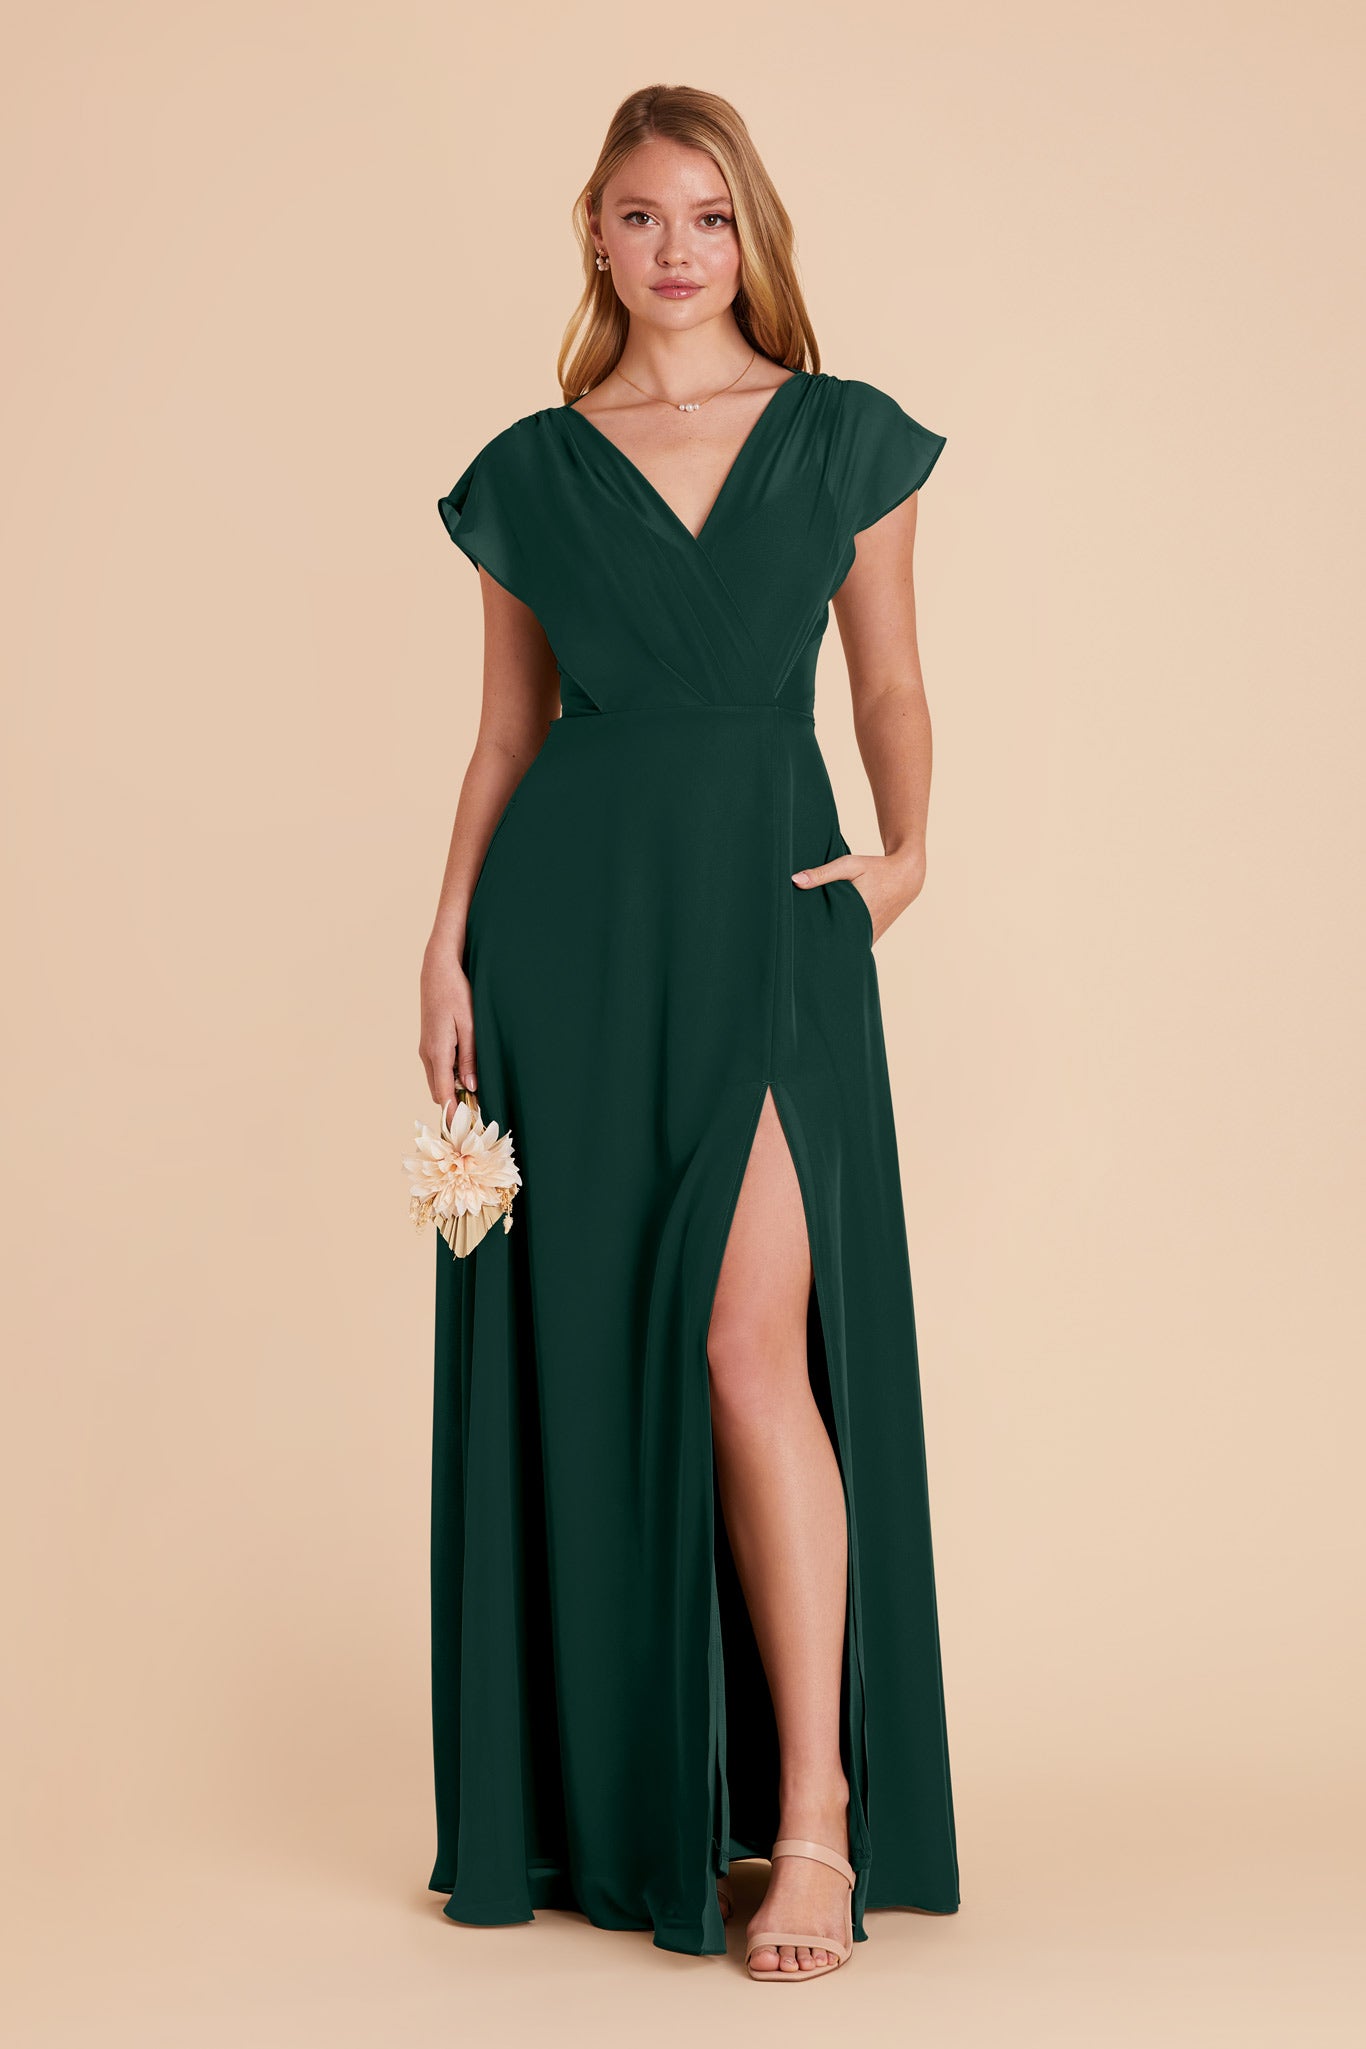 Emerald Violet Chiffon Bridesmaid Dress